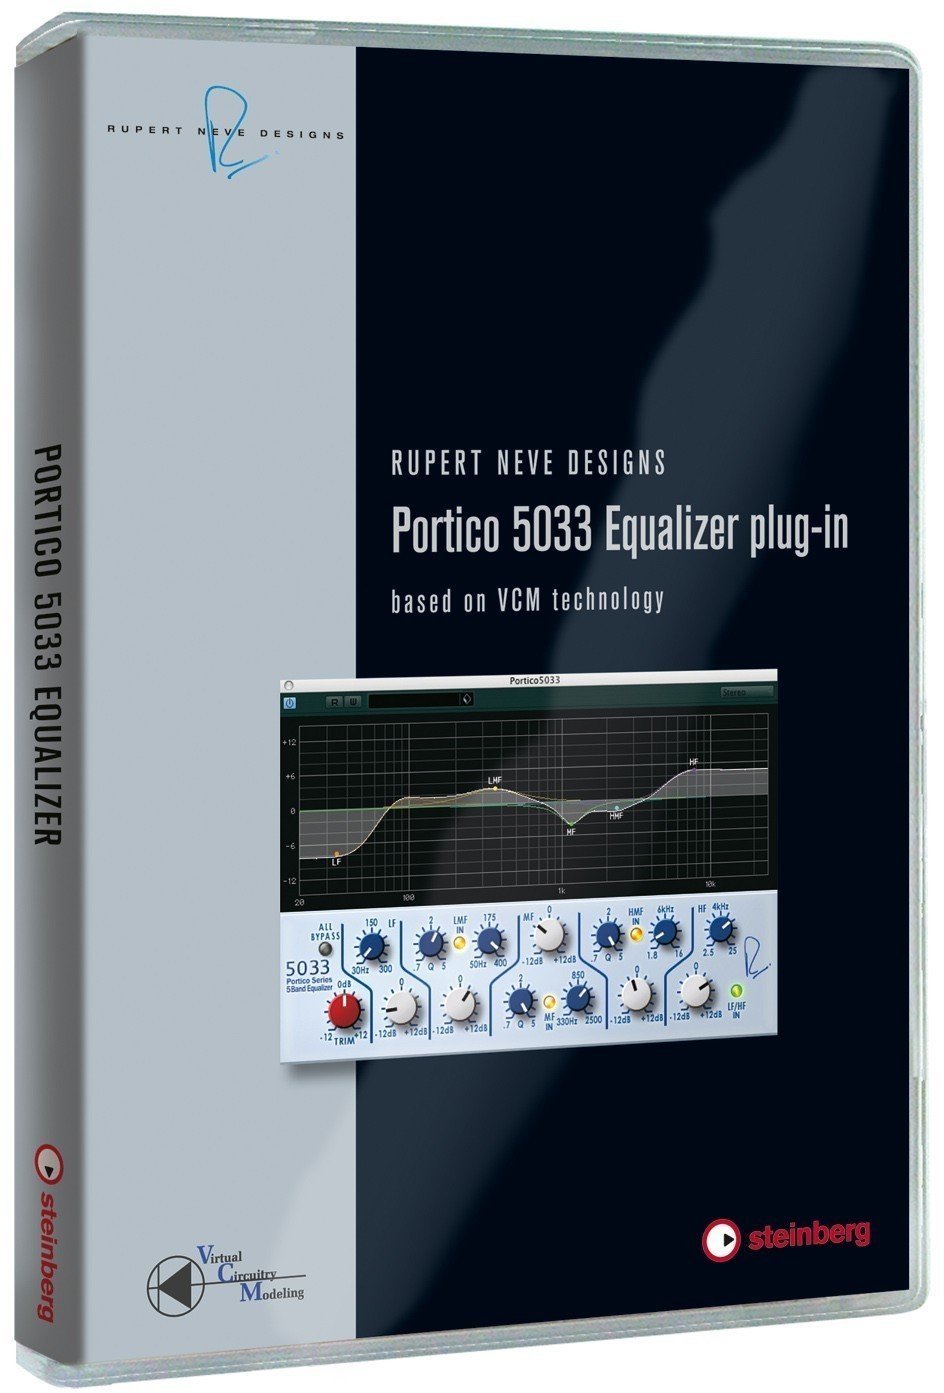 Studio Software Steinberg RND Portico 5033 EQ